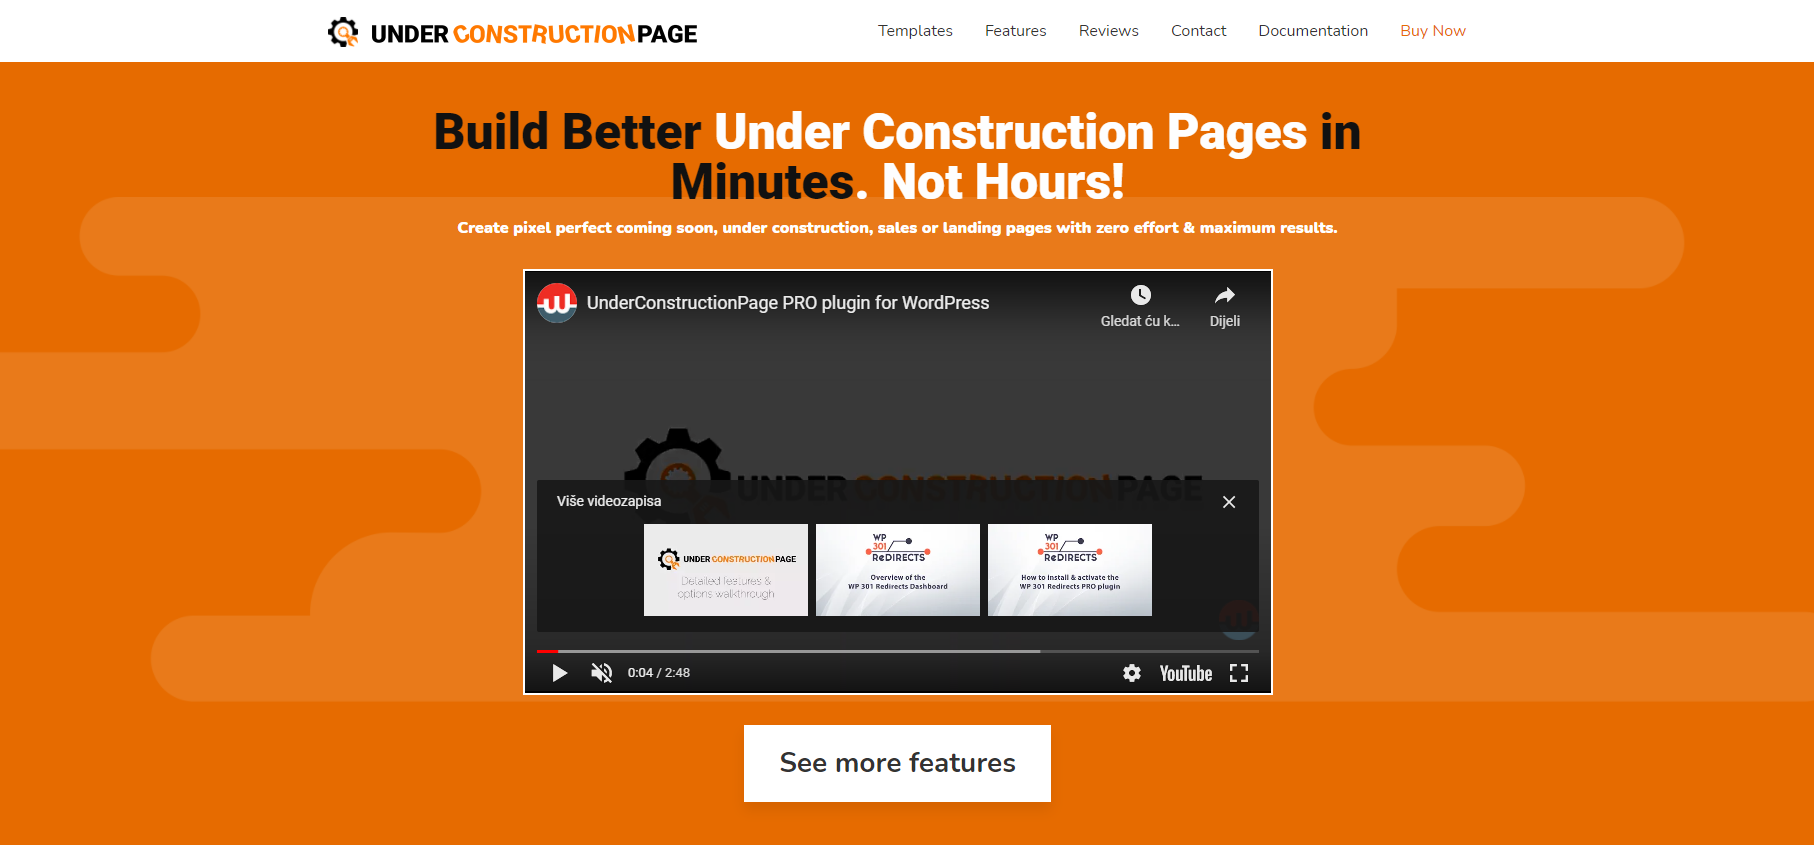 UnderConstructionPage homepage